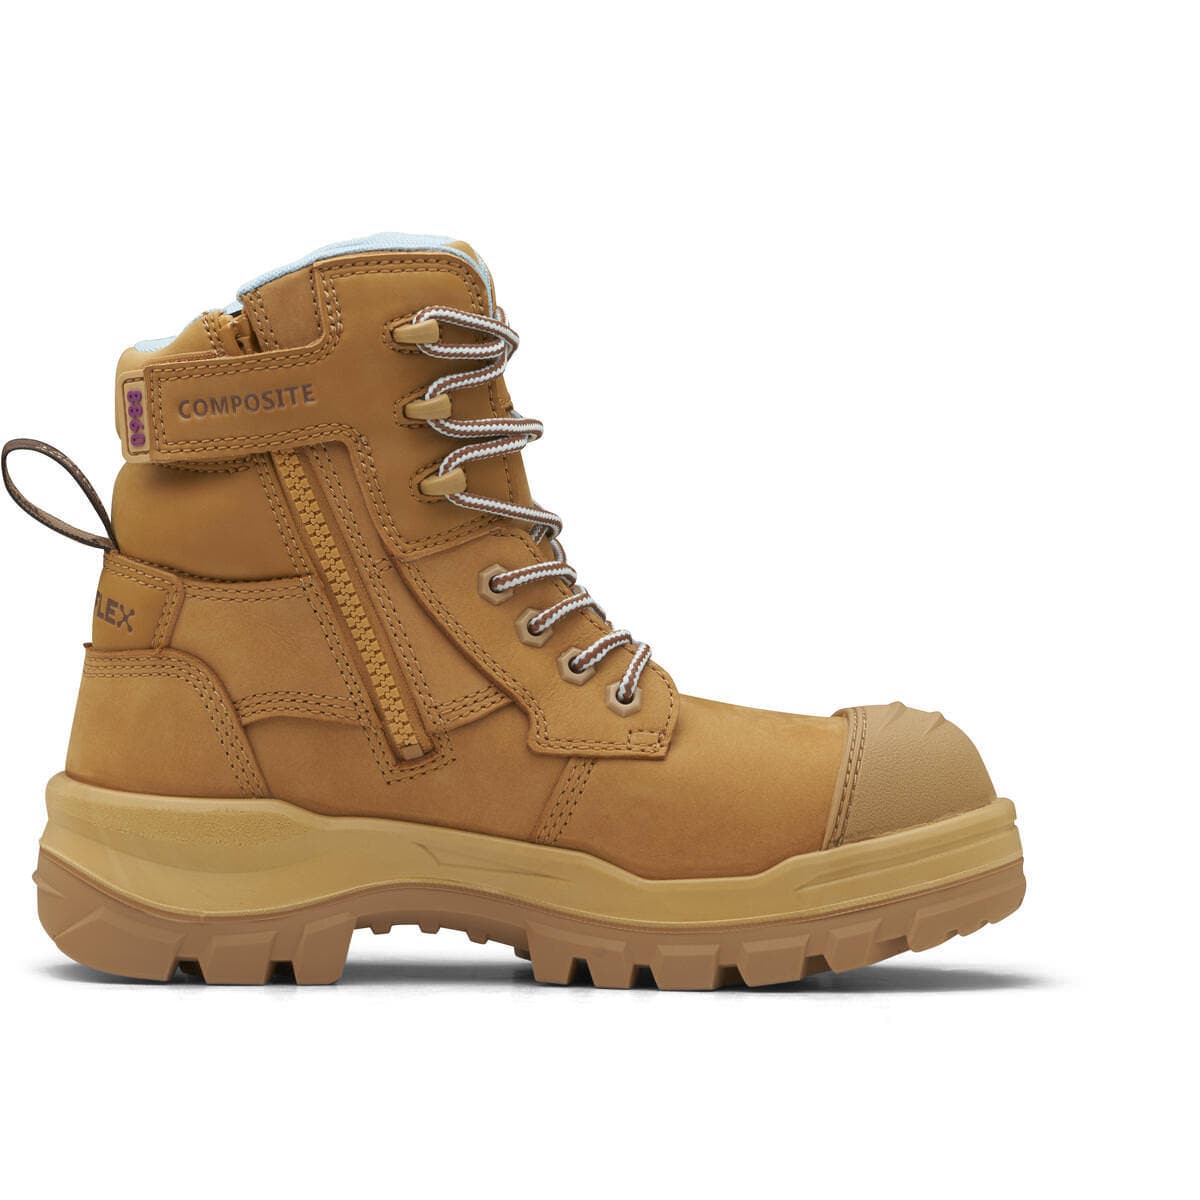 Blundstone Women's Rotoflex Safety Boots - Wheat #8860